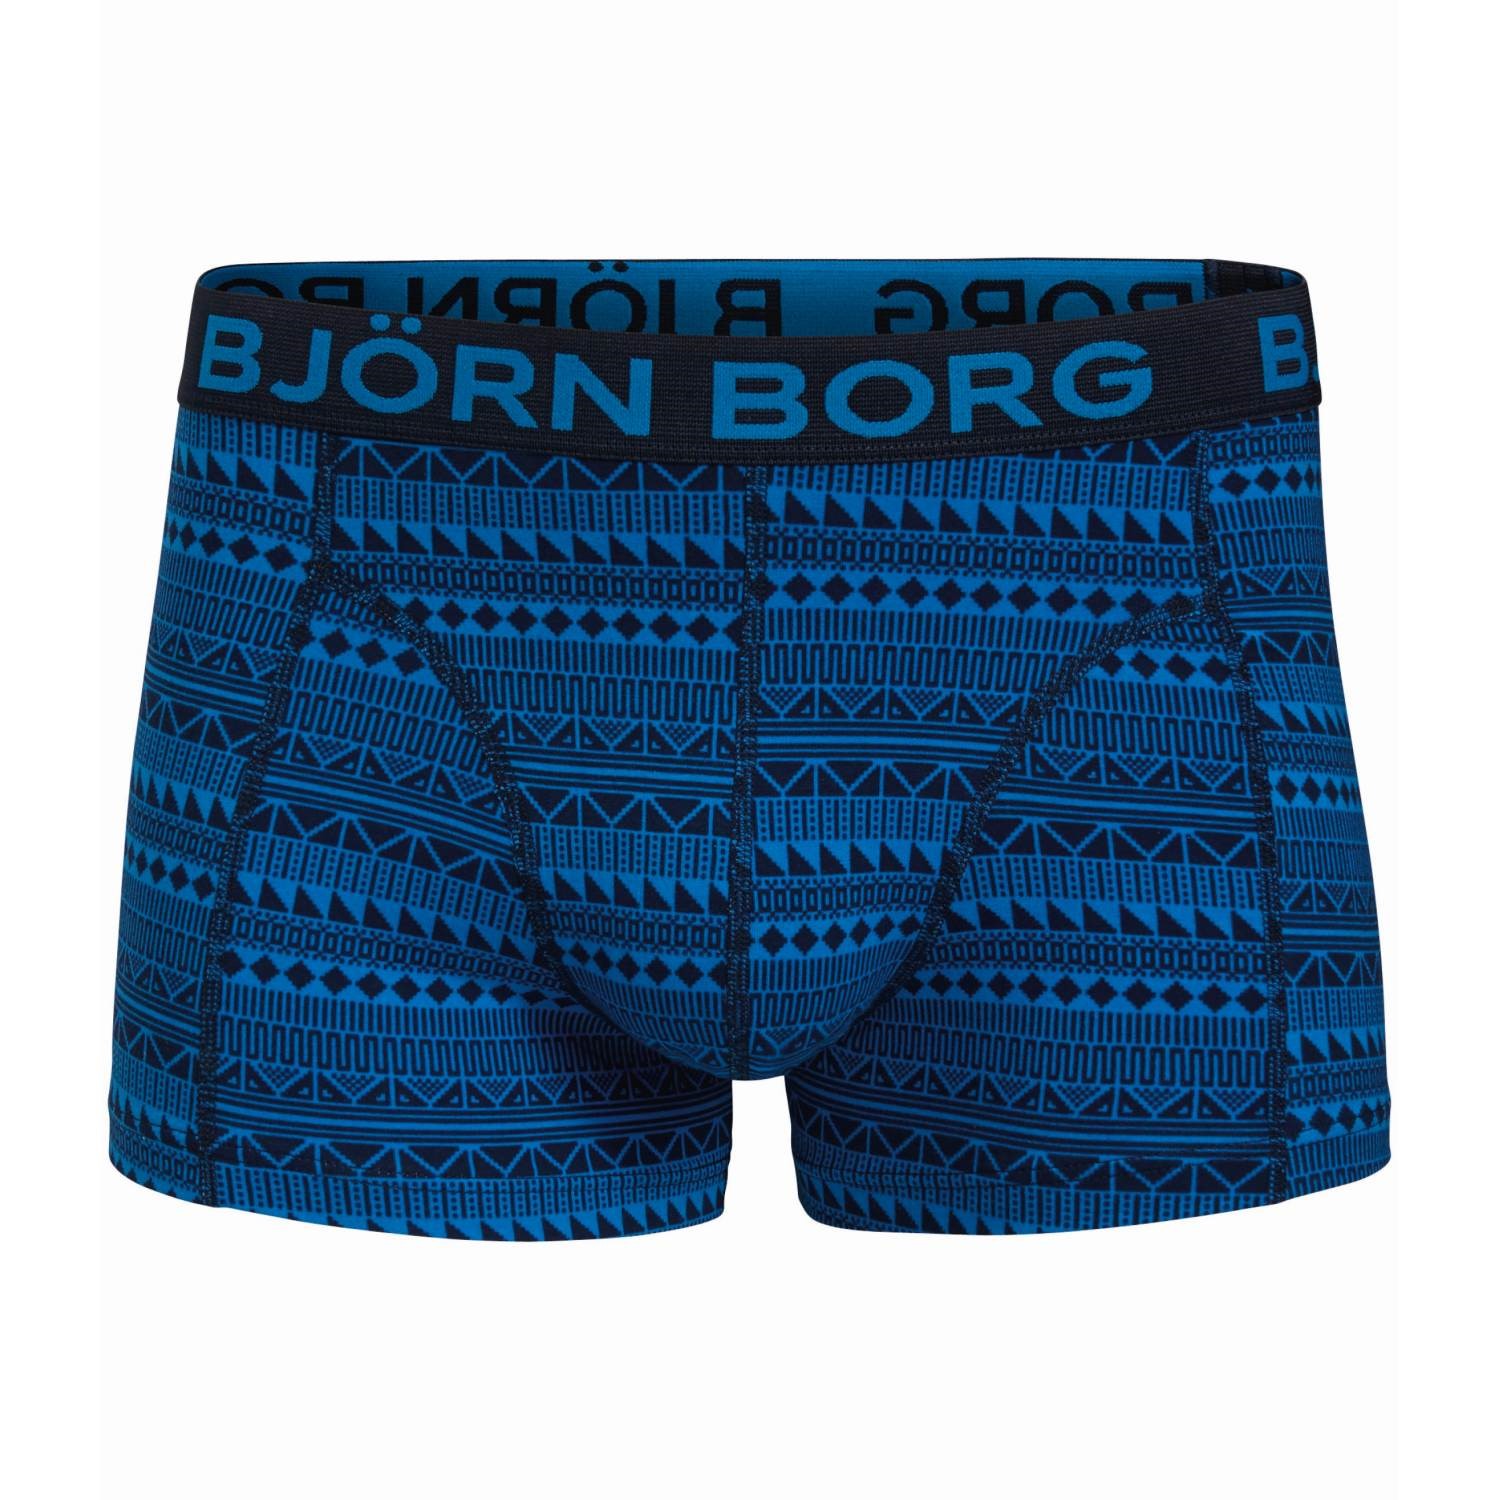 Björn Borg Short Shorts Back To The Future